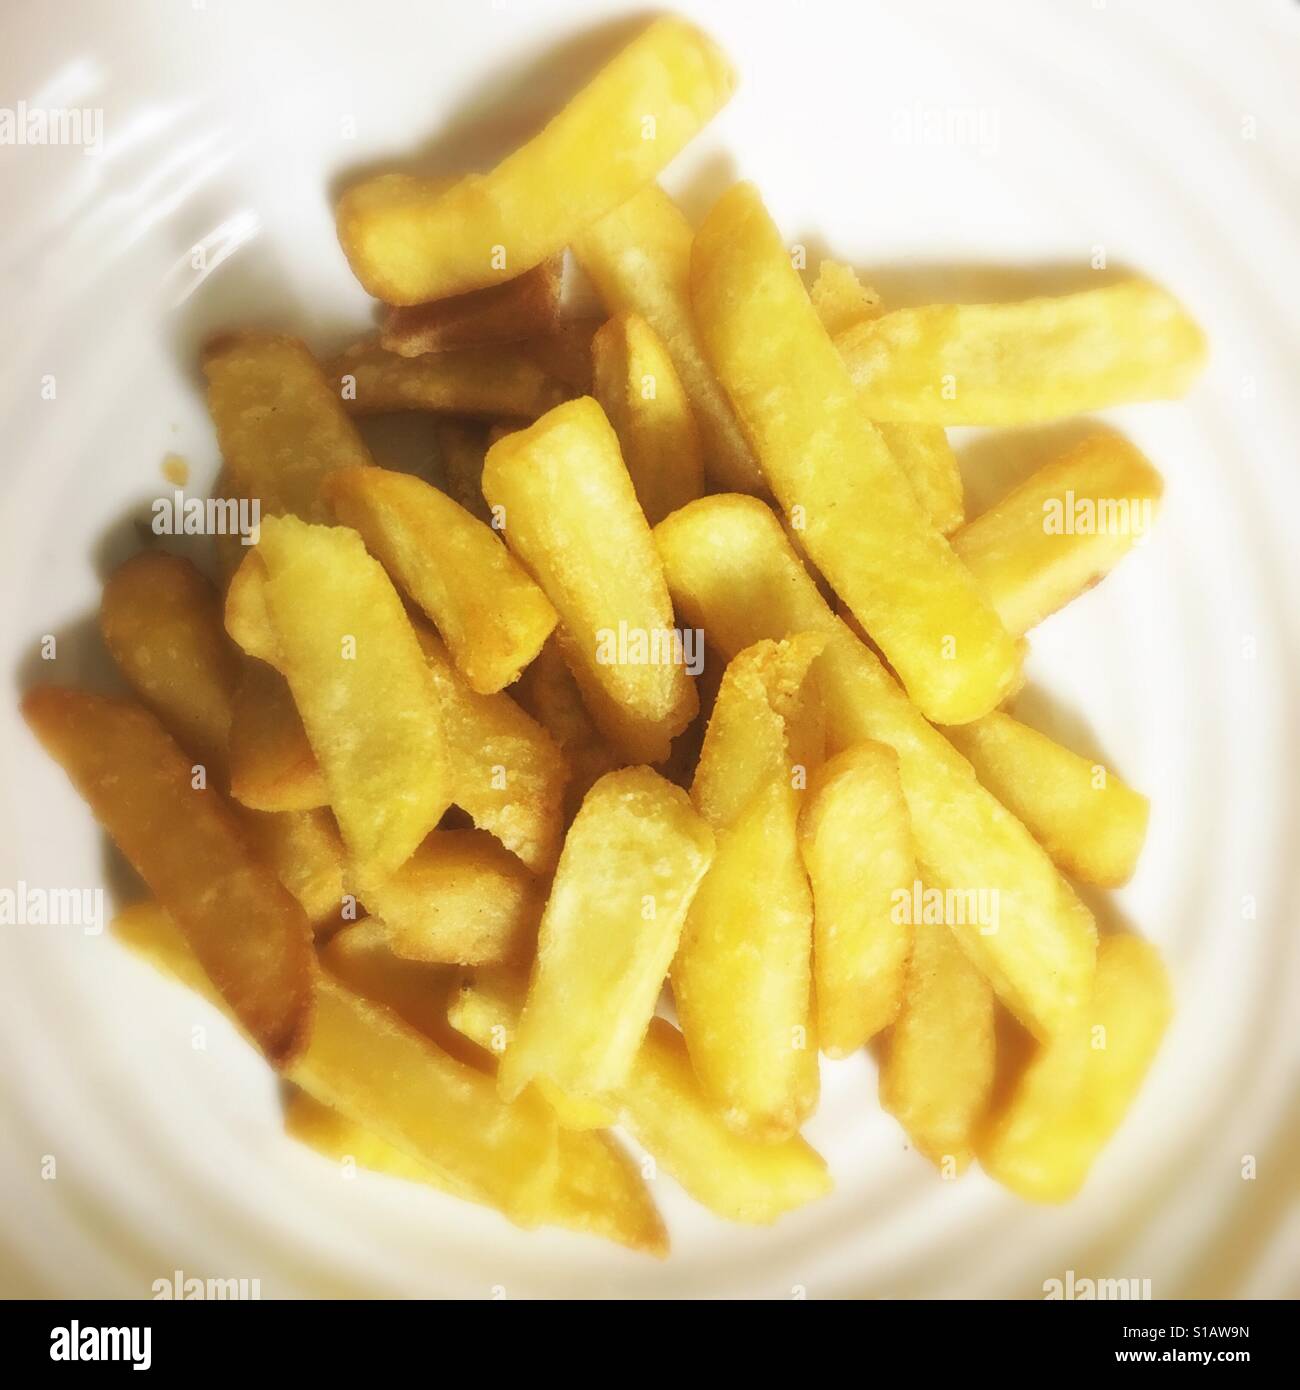 Potato chips, UK Stock Photo